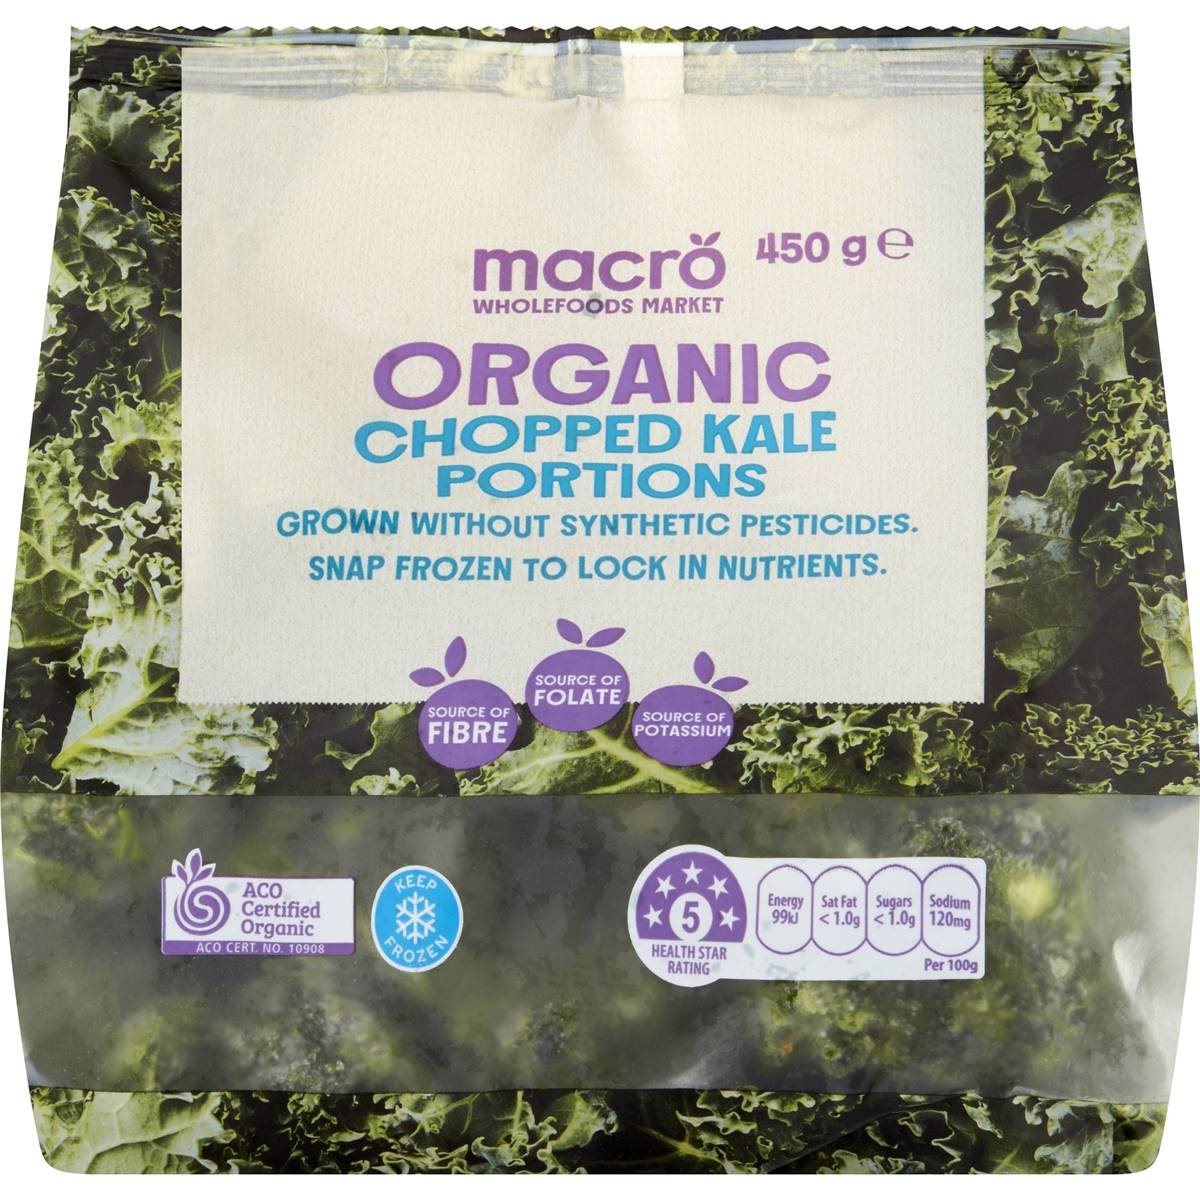 Calories in Macro Organic Chopped Kale Portions